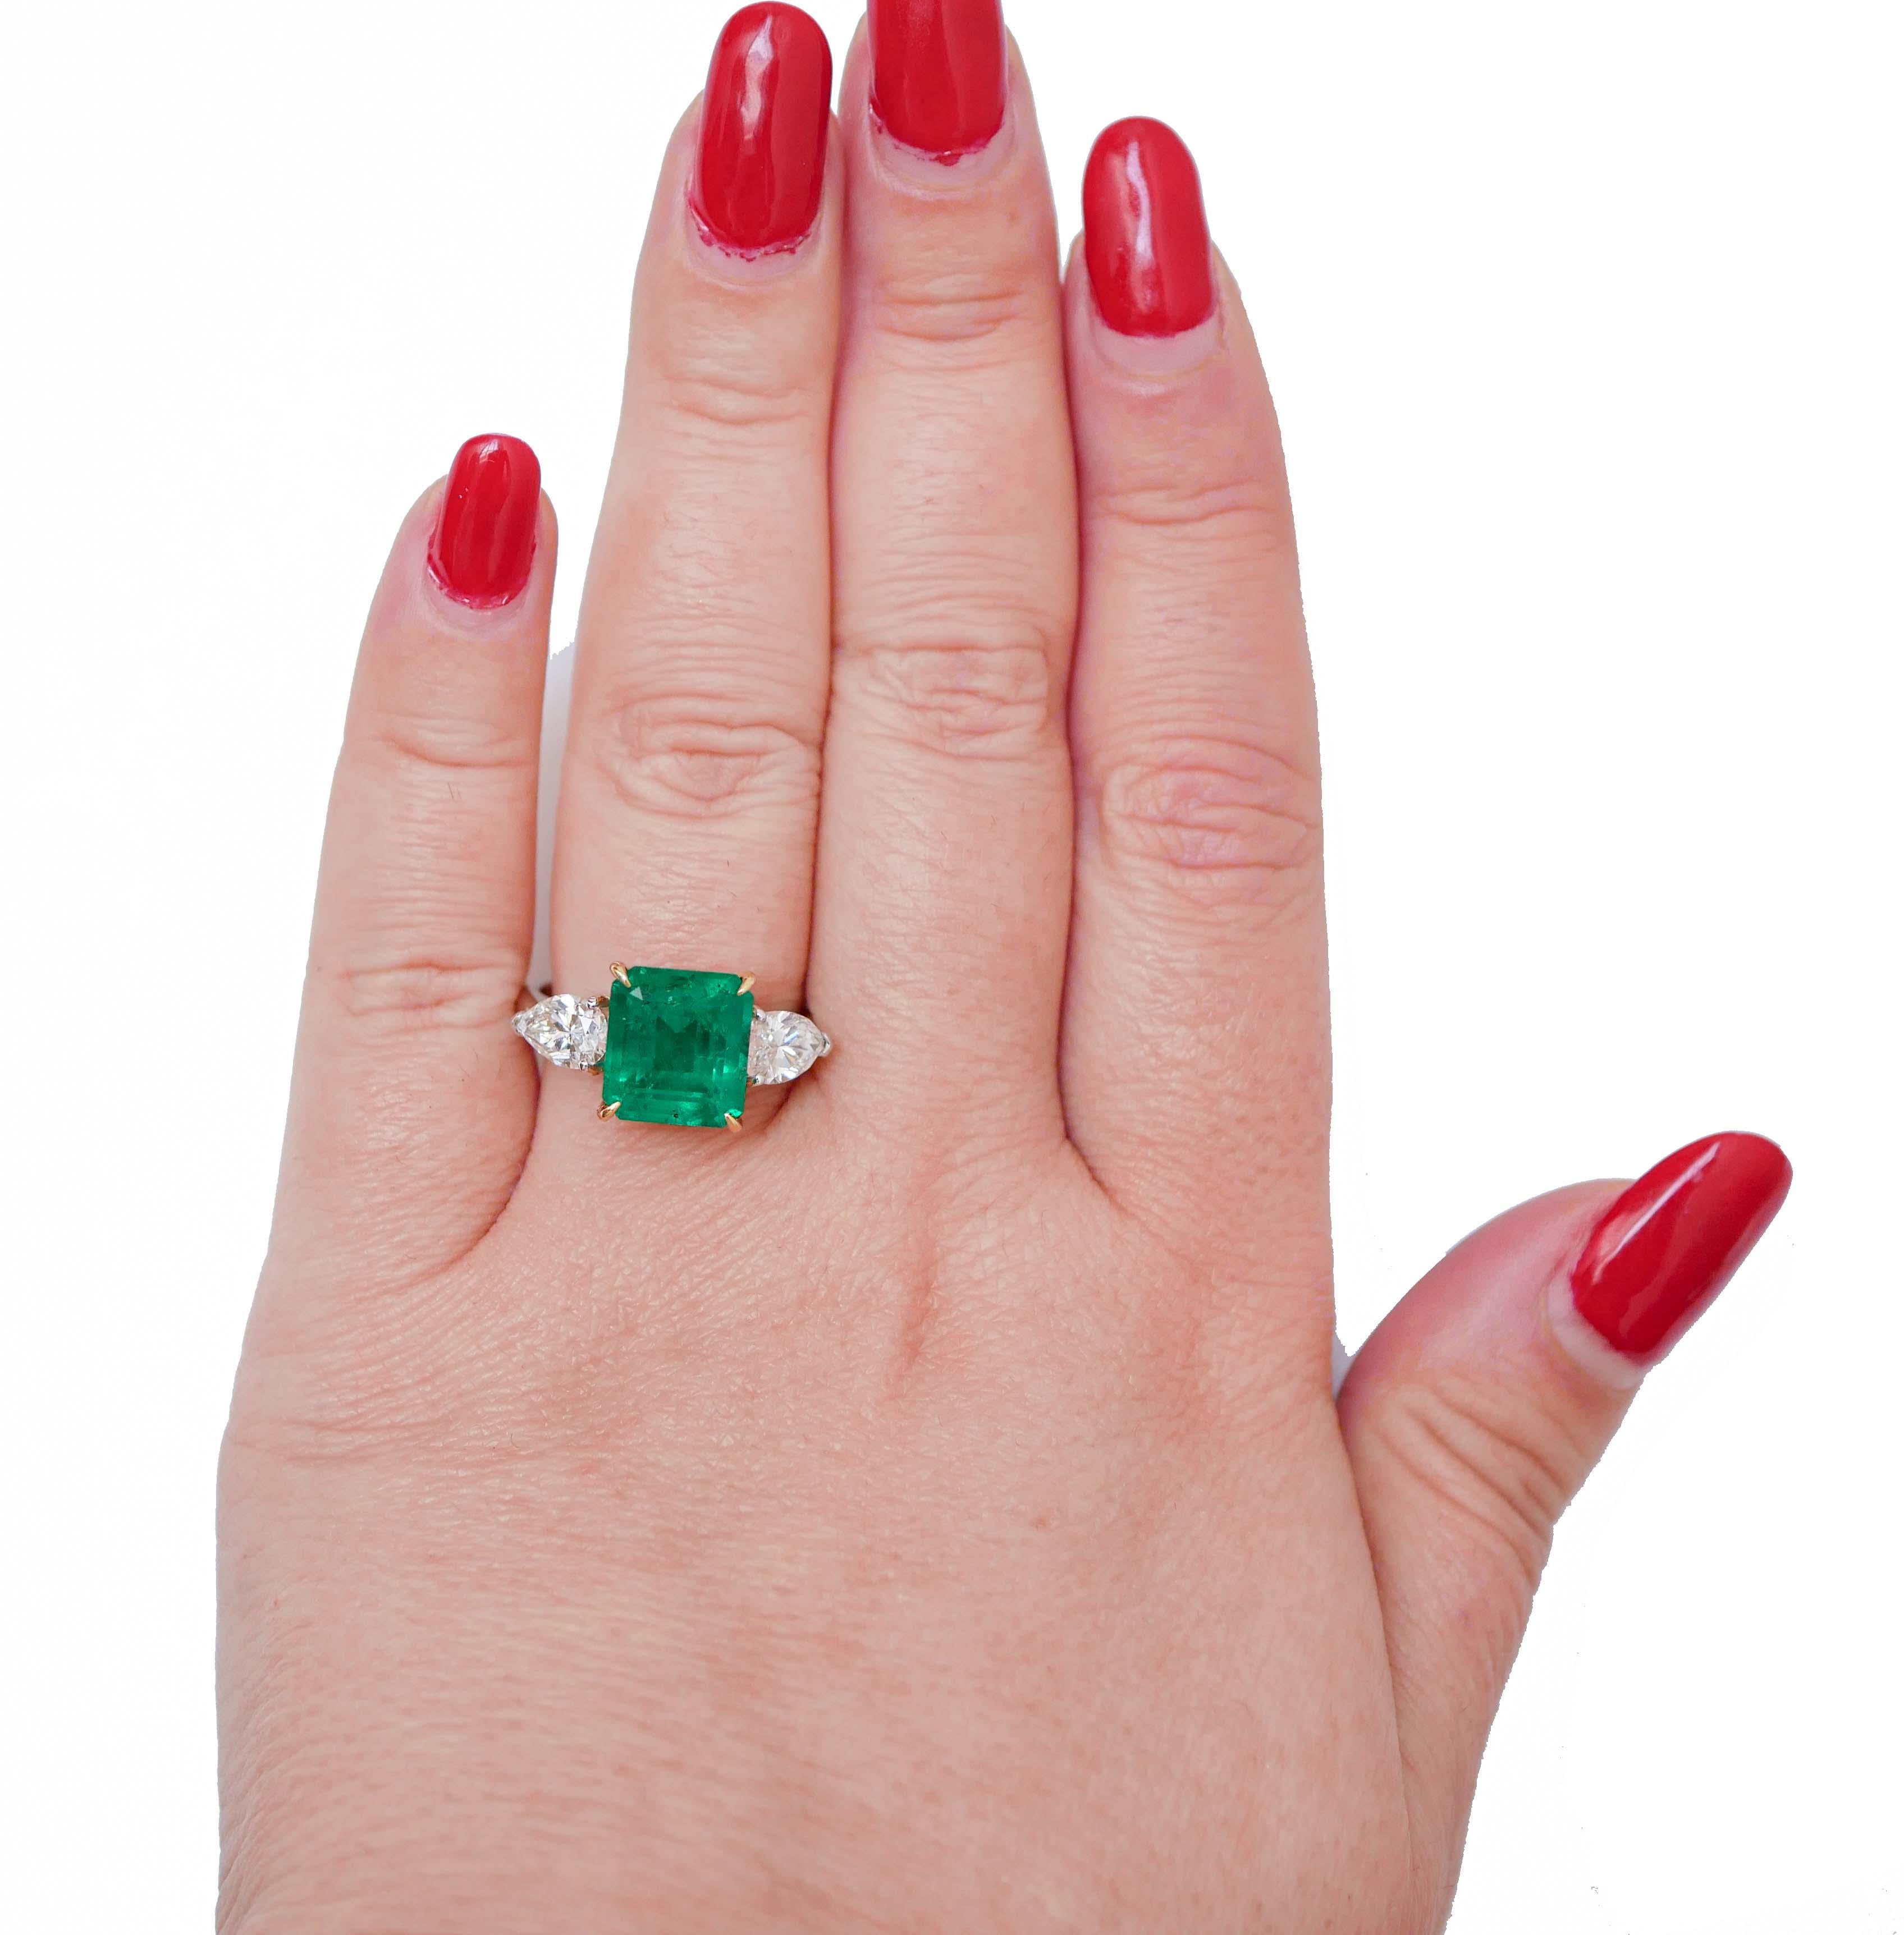 Mixed Cut 4.27 Carat Emerald, Diamonds, 18 Karat White Gold Ring. For Sale